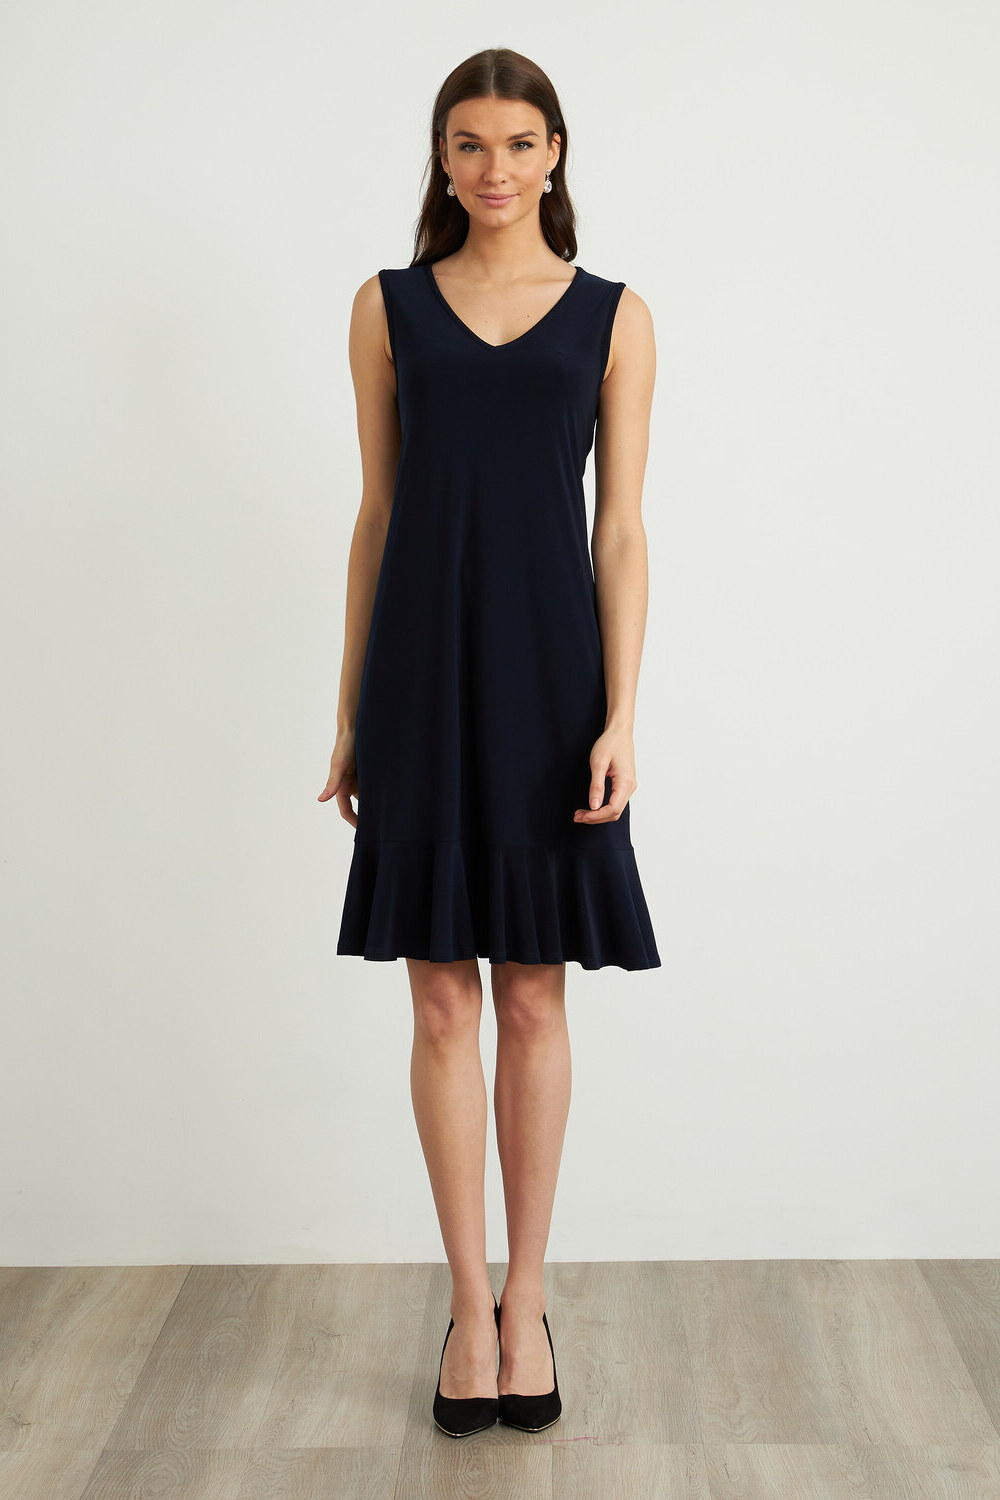 Joseph Ribkoff Sleeveless Mini Dress Style 212204. Midnight Blue 40